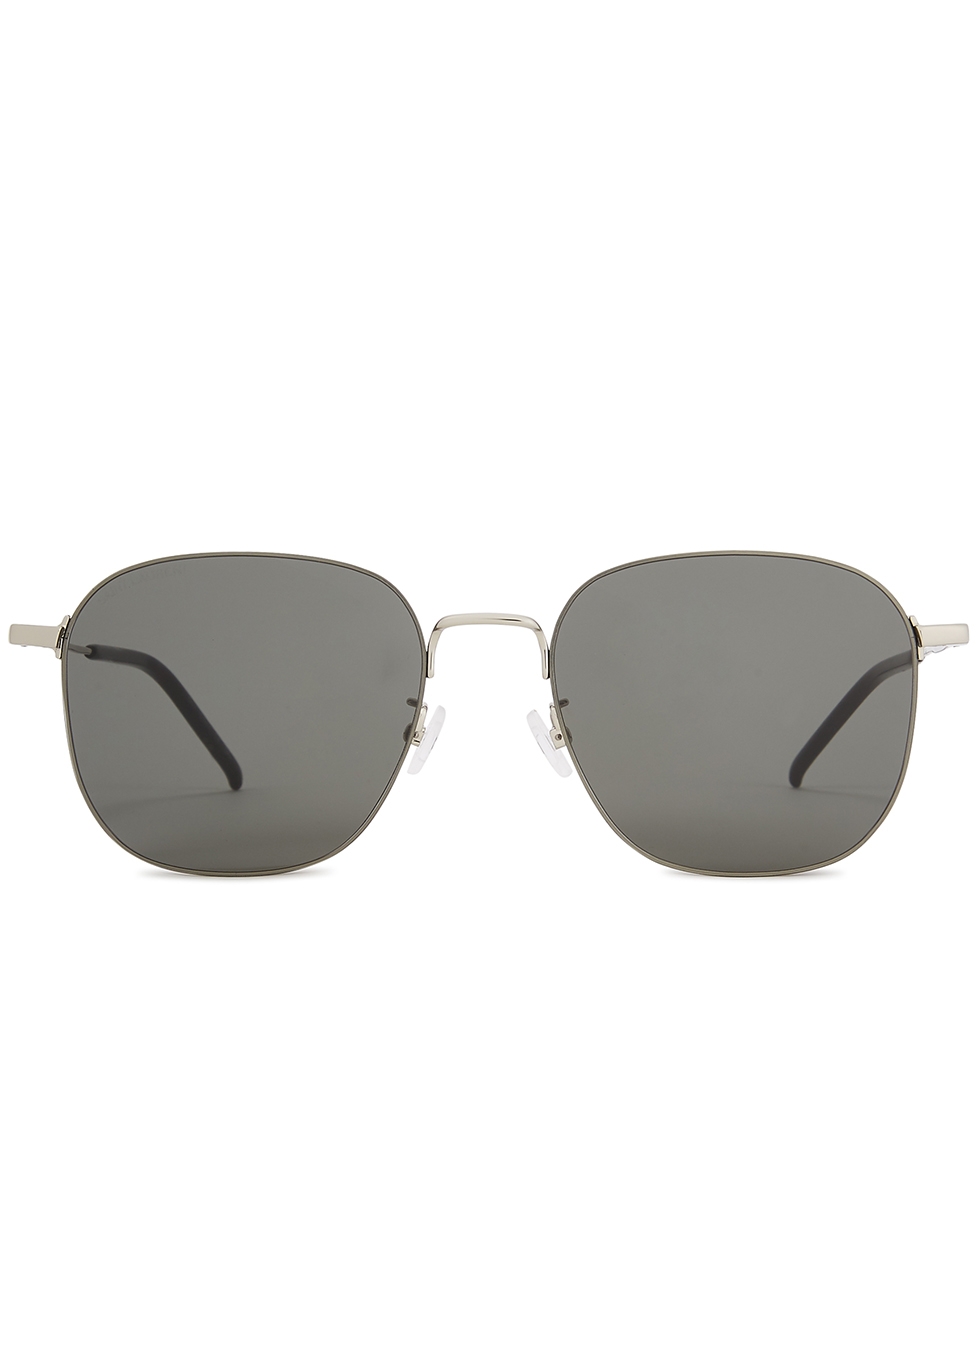 black wire frame sunglasses